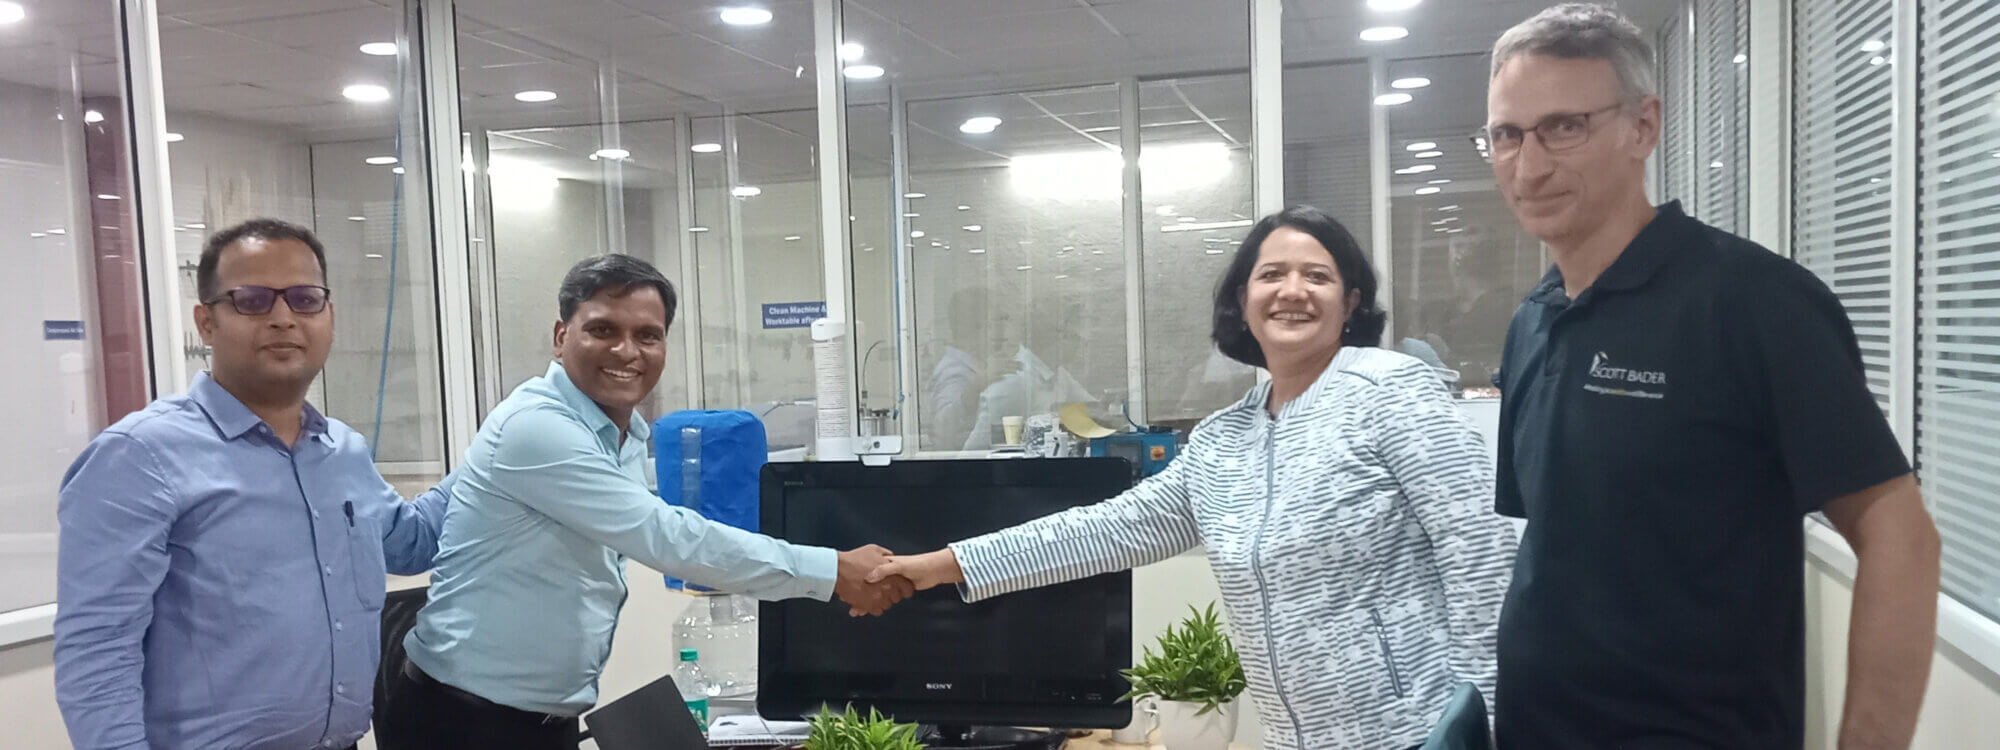 Scott Bader partner with Elixir for the distribution of Crestabond in India